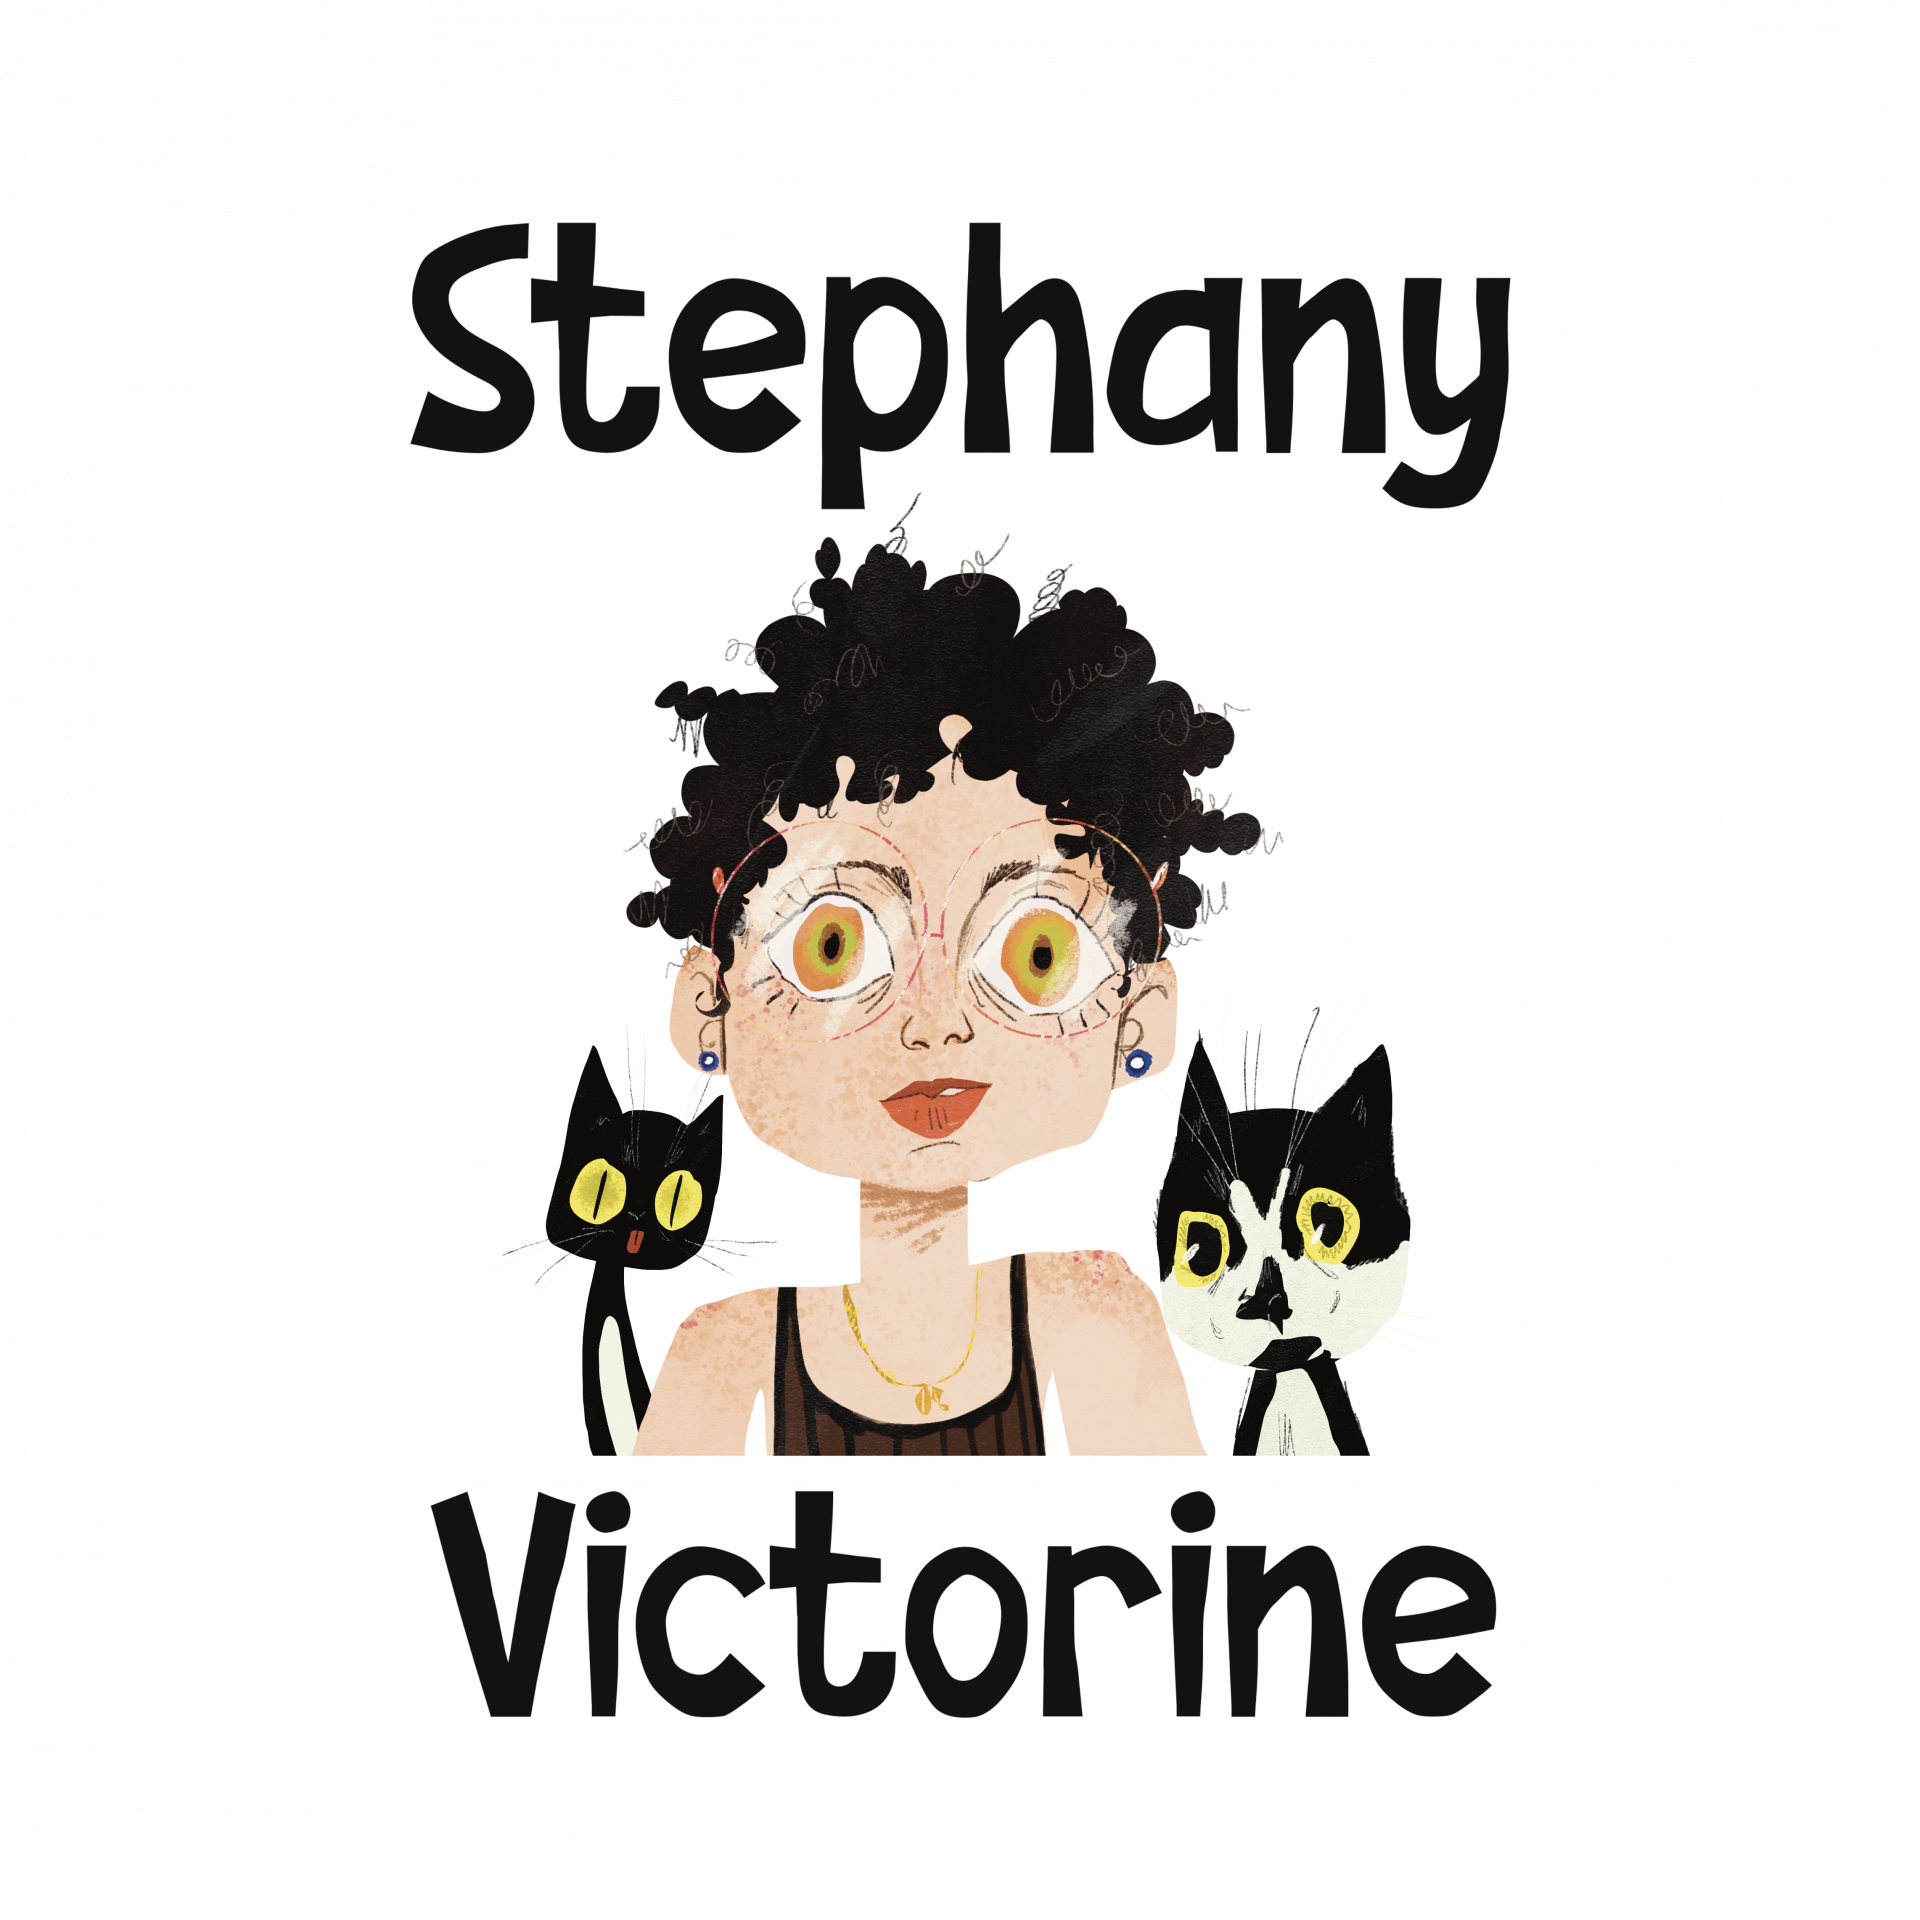 Stephany Victorine